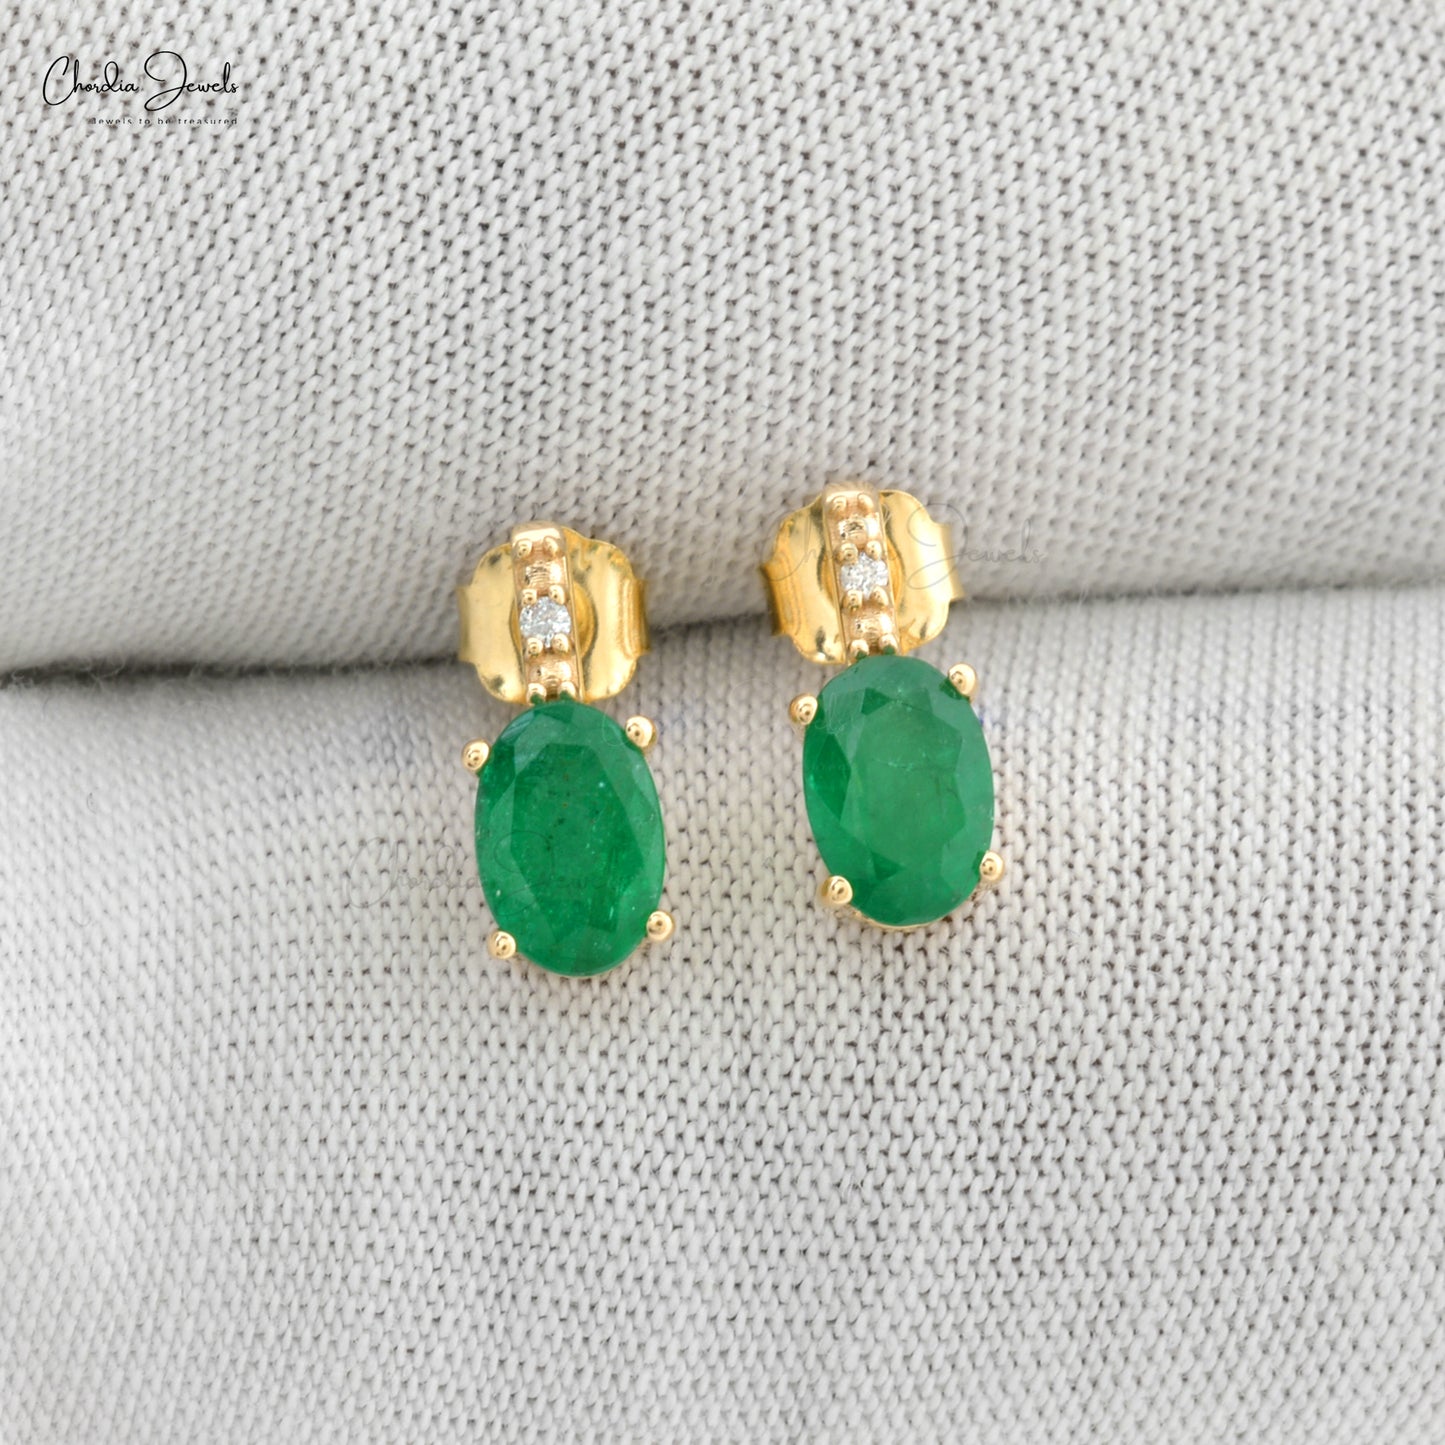 Genuine Emerald & Diamond Earrings Solid 14k Yellow Gold Stud Earrings For Her